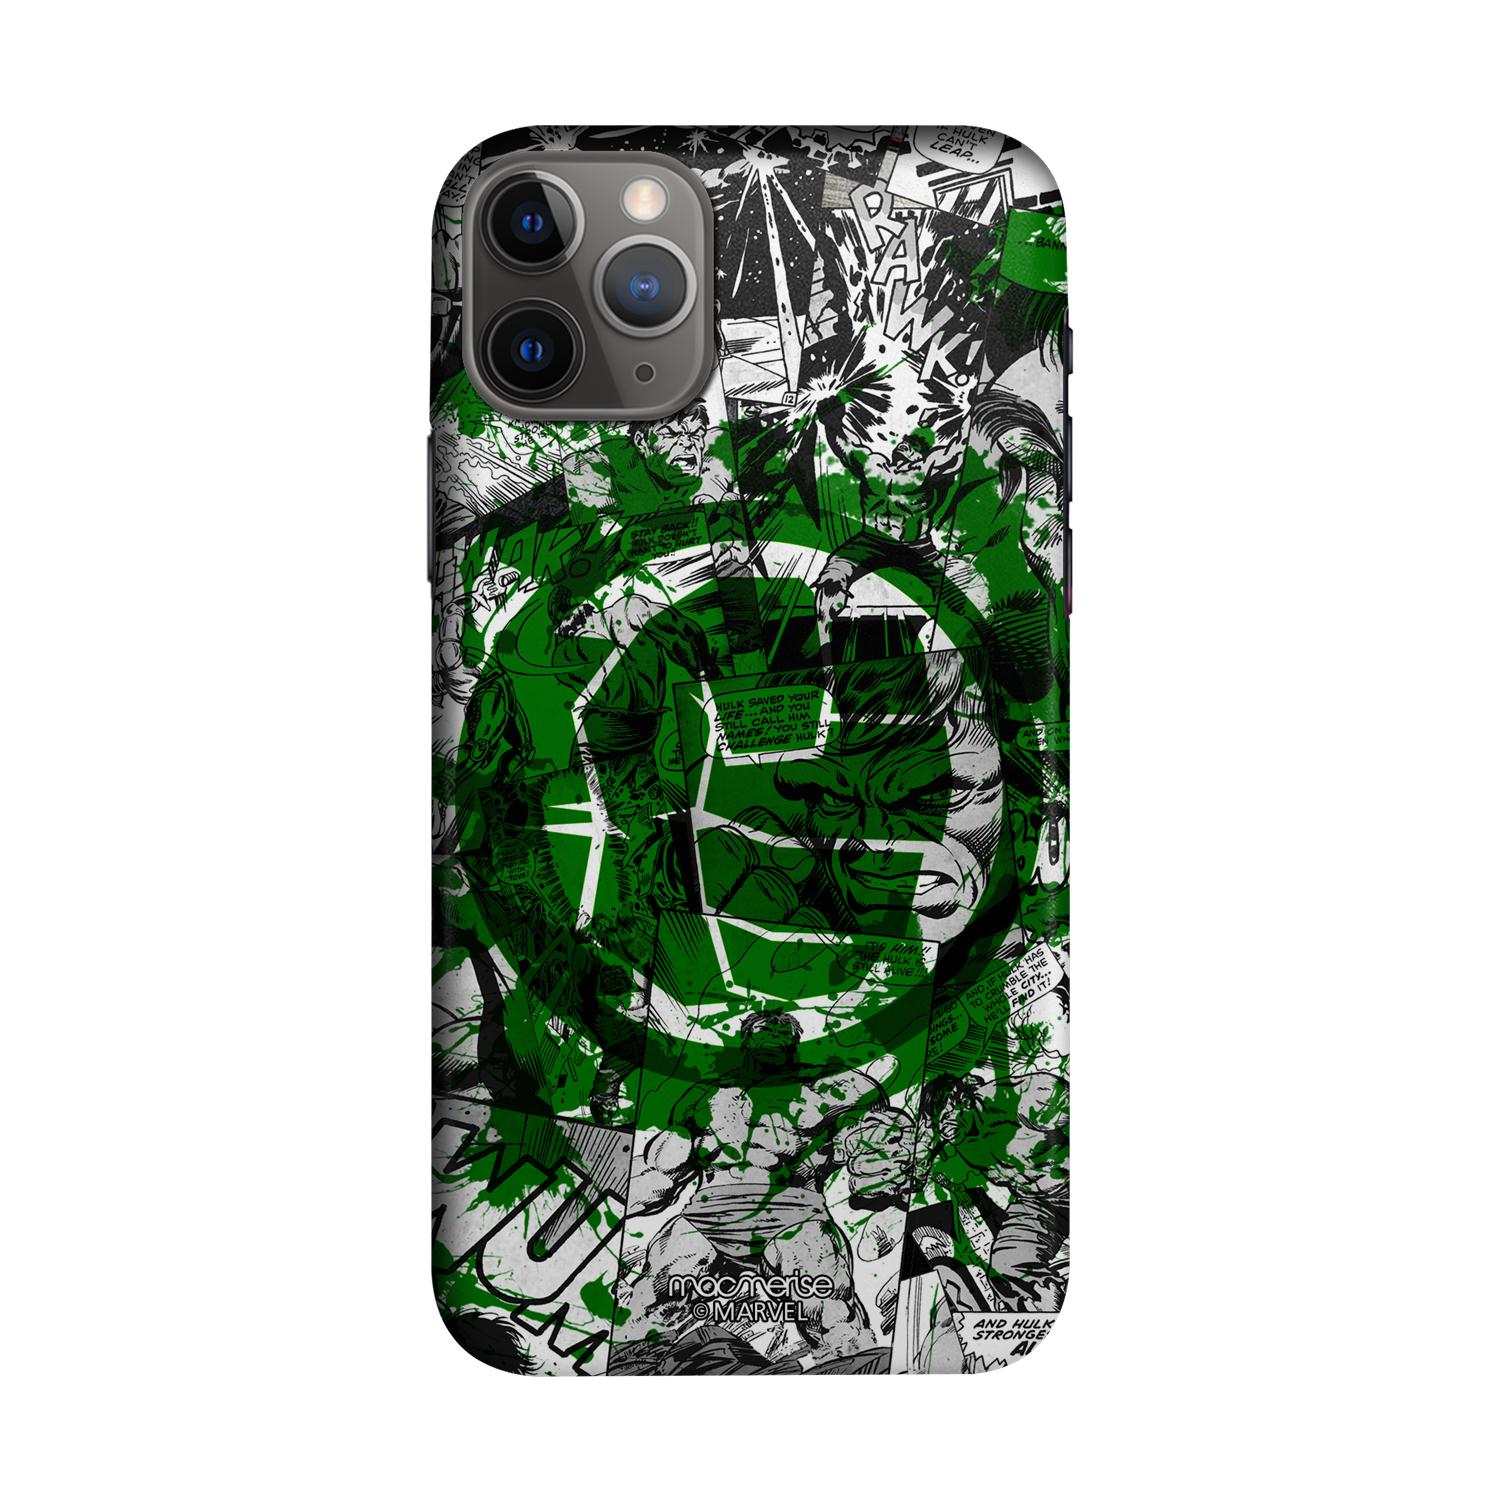 Splash Out Hulk Fist - Sleek Phone Case for iPhone 11 Pro